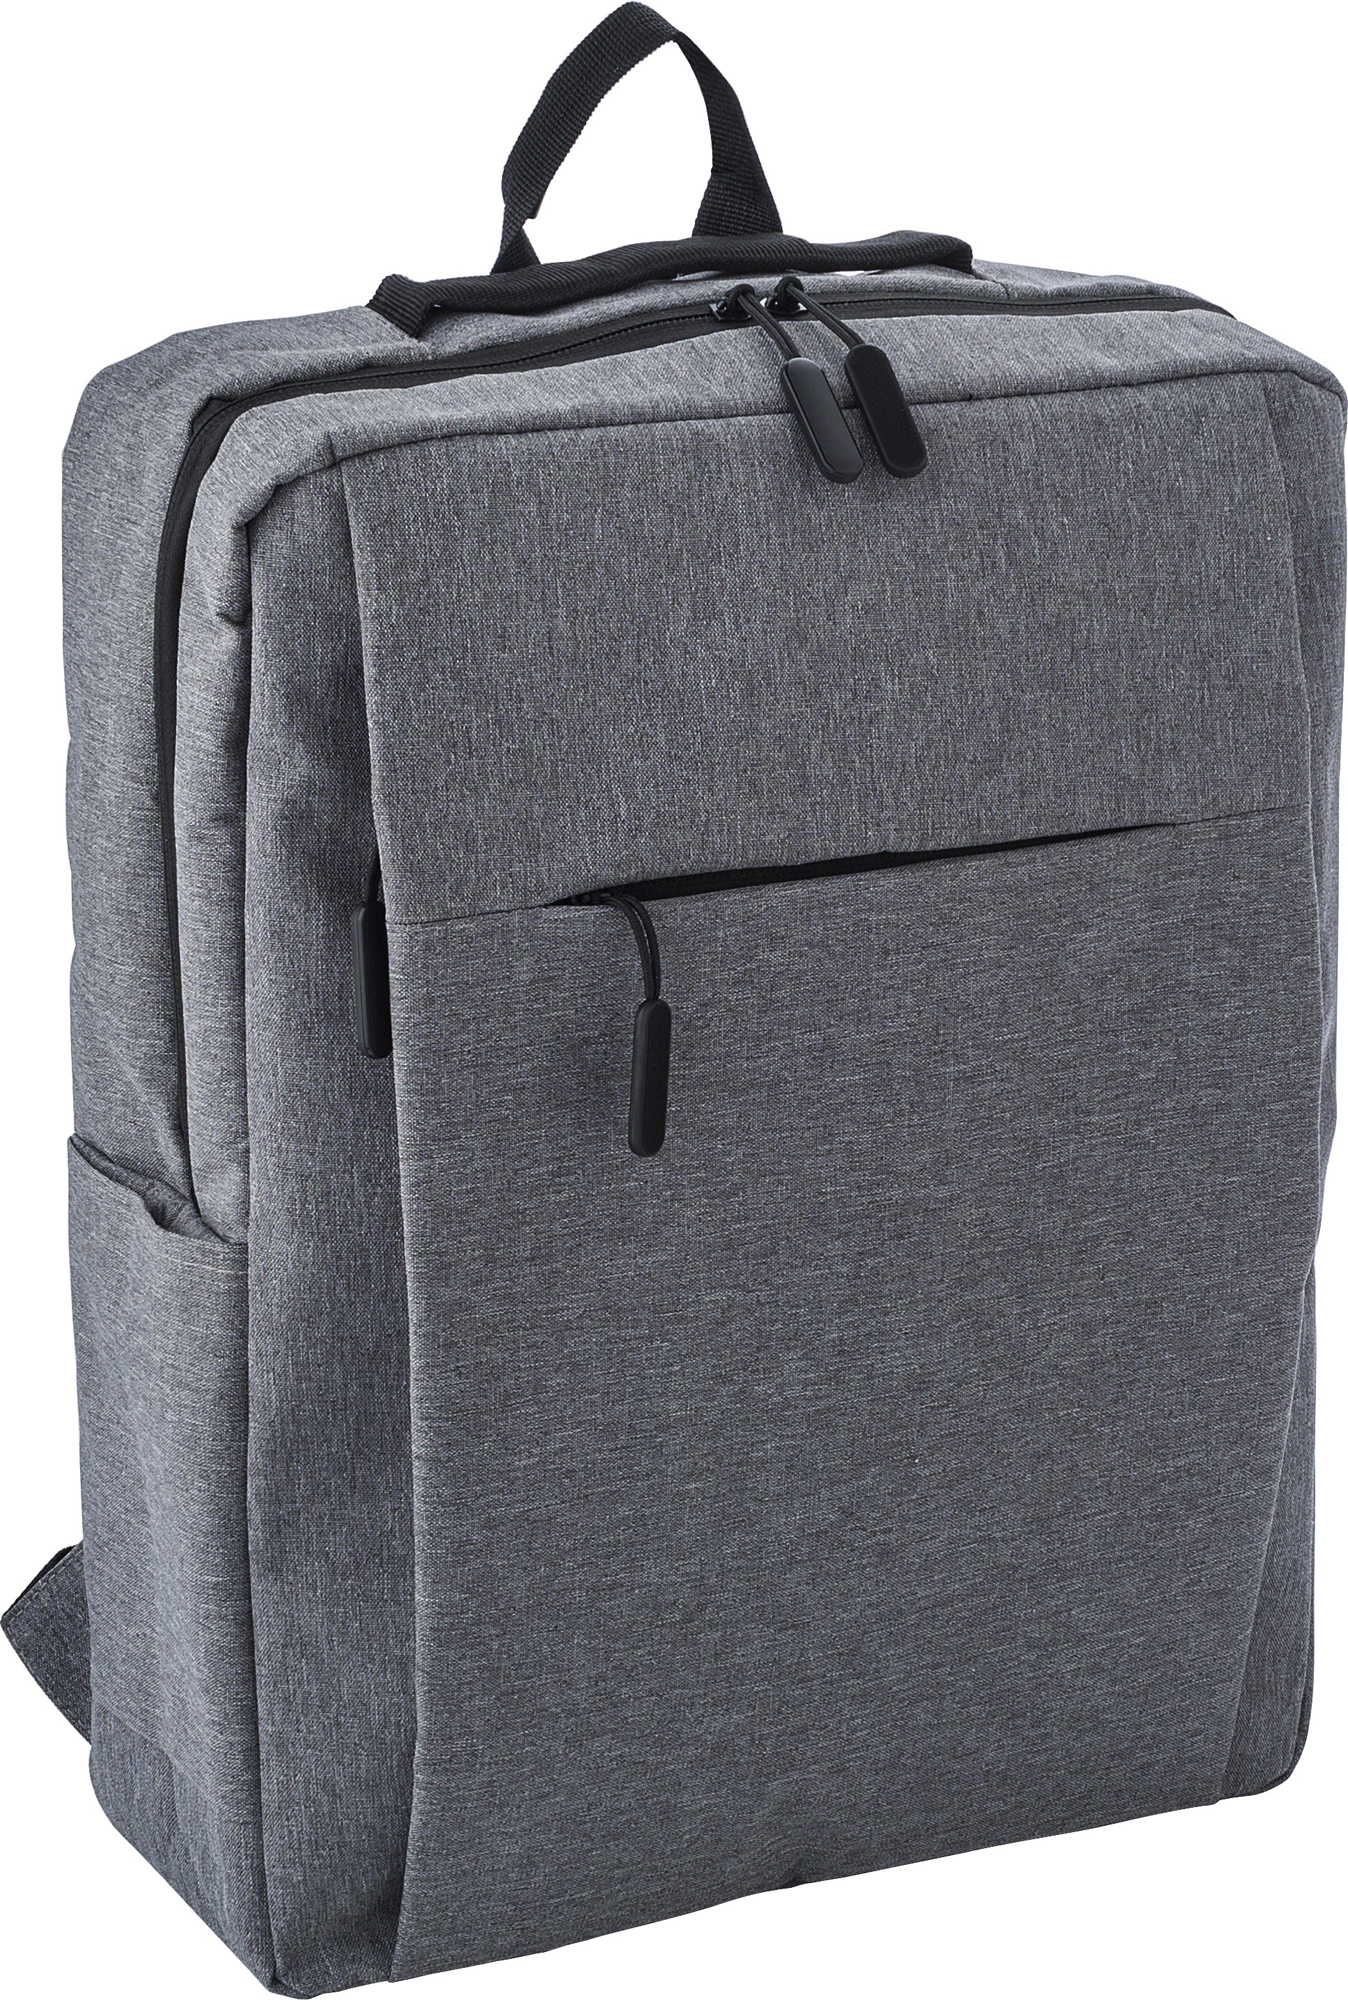 000000864735 003999999 3d135 lft pro01 2022 fal - Polyester backpack